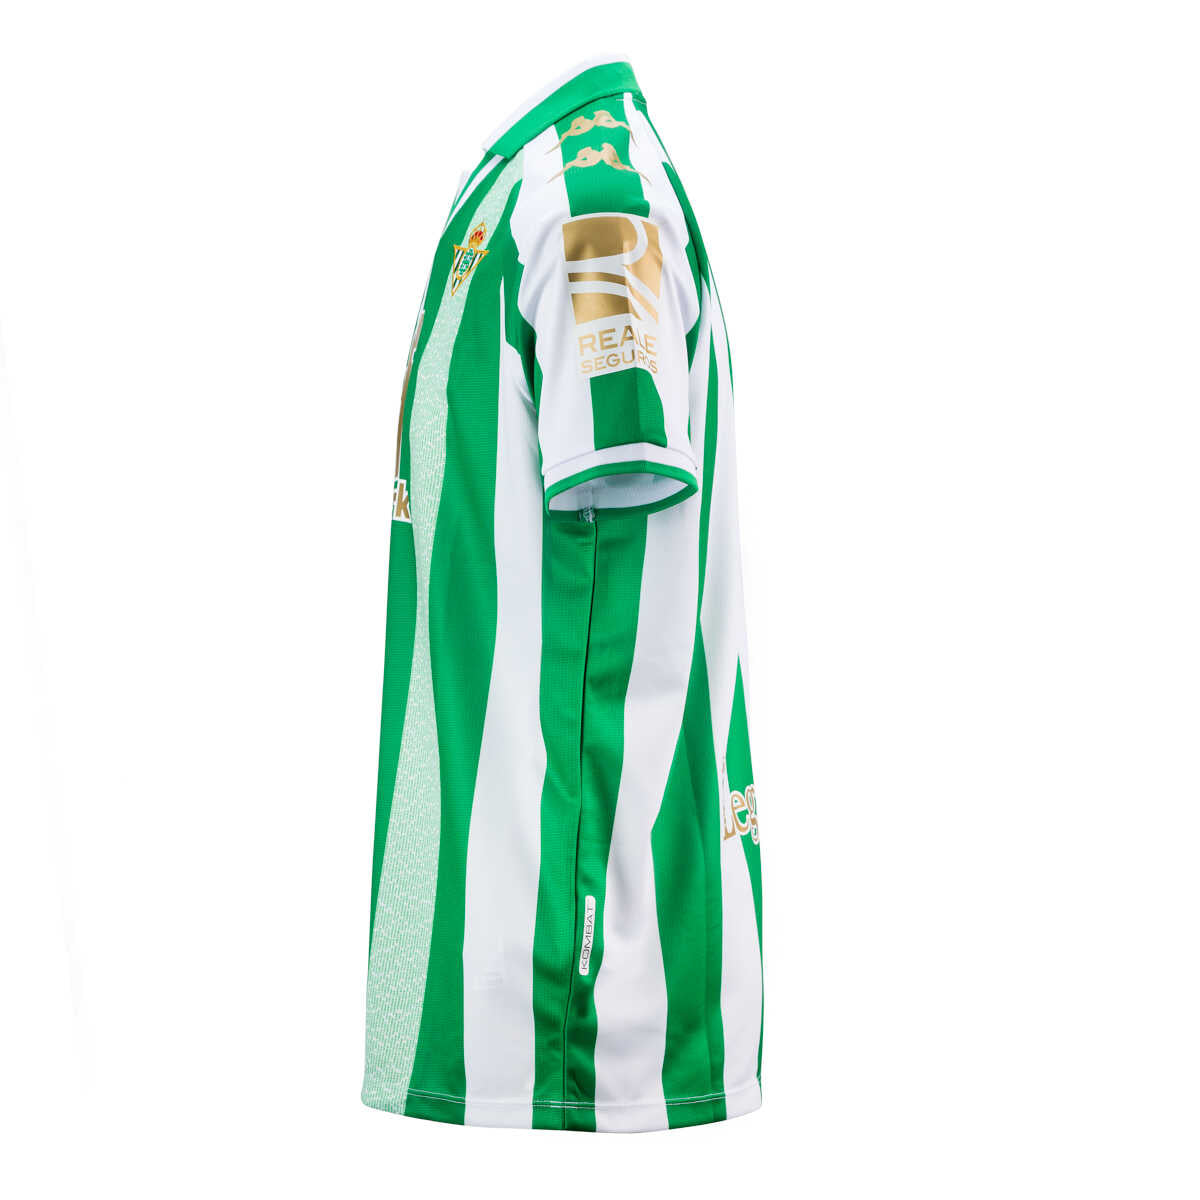 Hombre - Camiseta Kombat "Campeones" Real Betis Balompié blanco - imagen 2